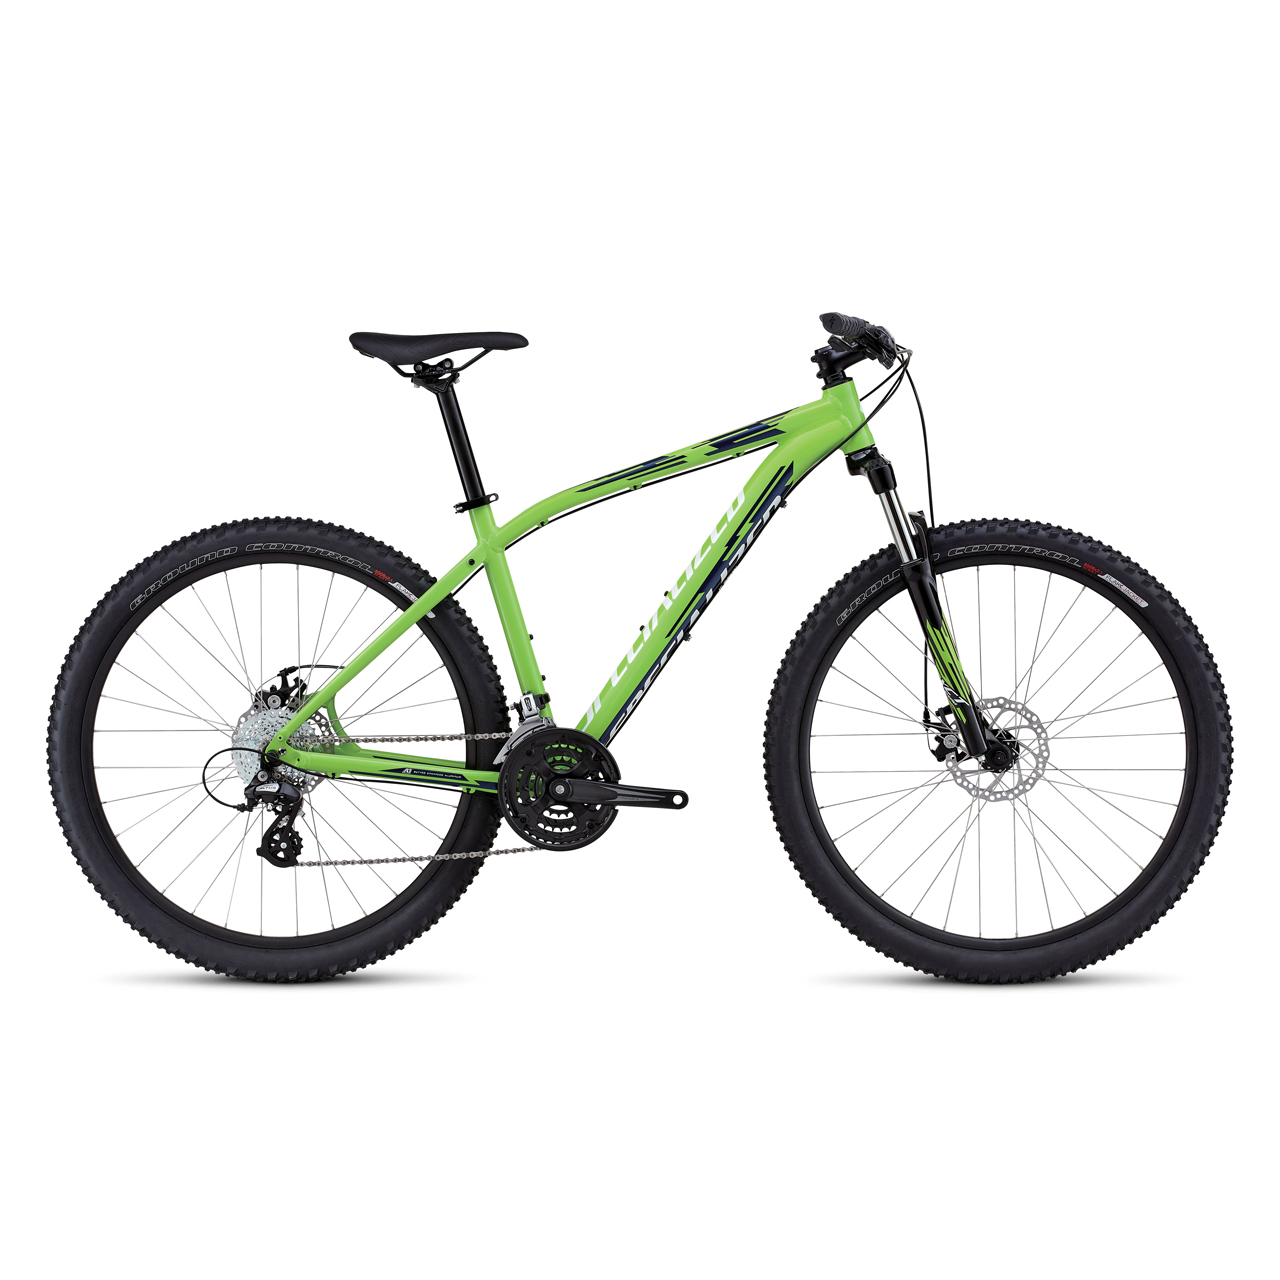 دوچرخه کوهستان اسپشیالایزد Pitch 650B سایز 27.5 رنگ سبز